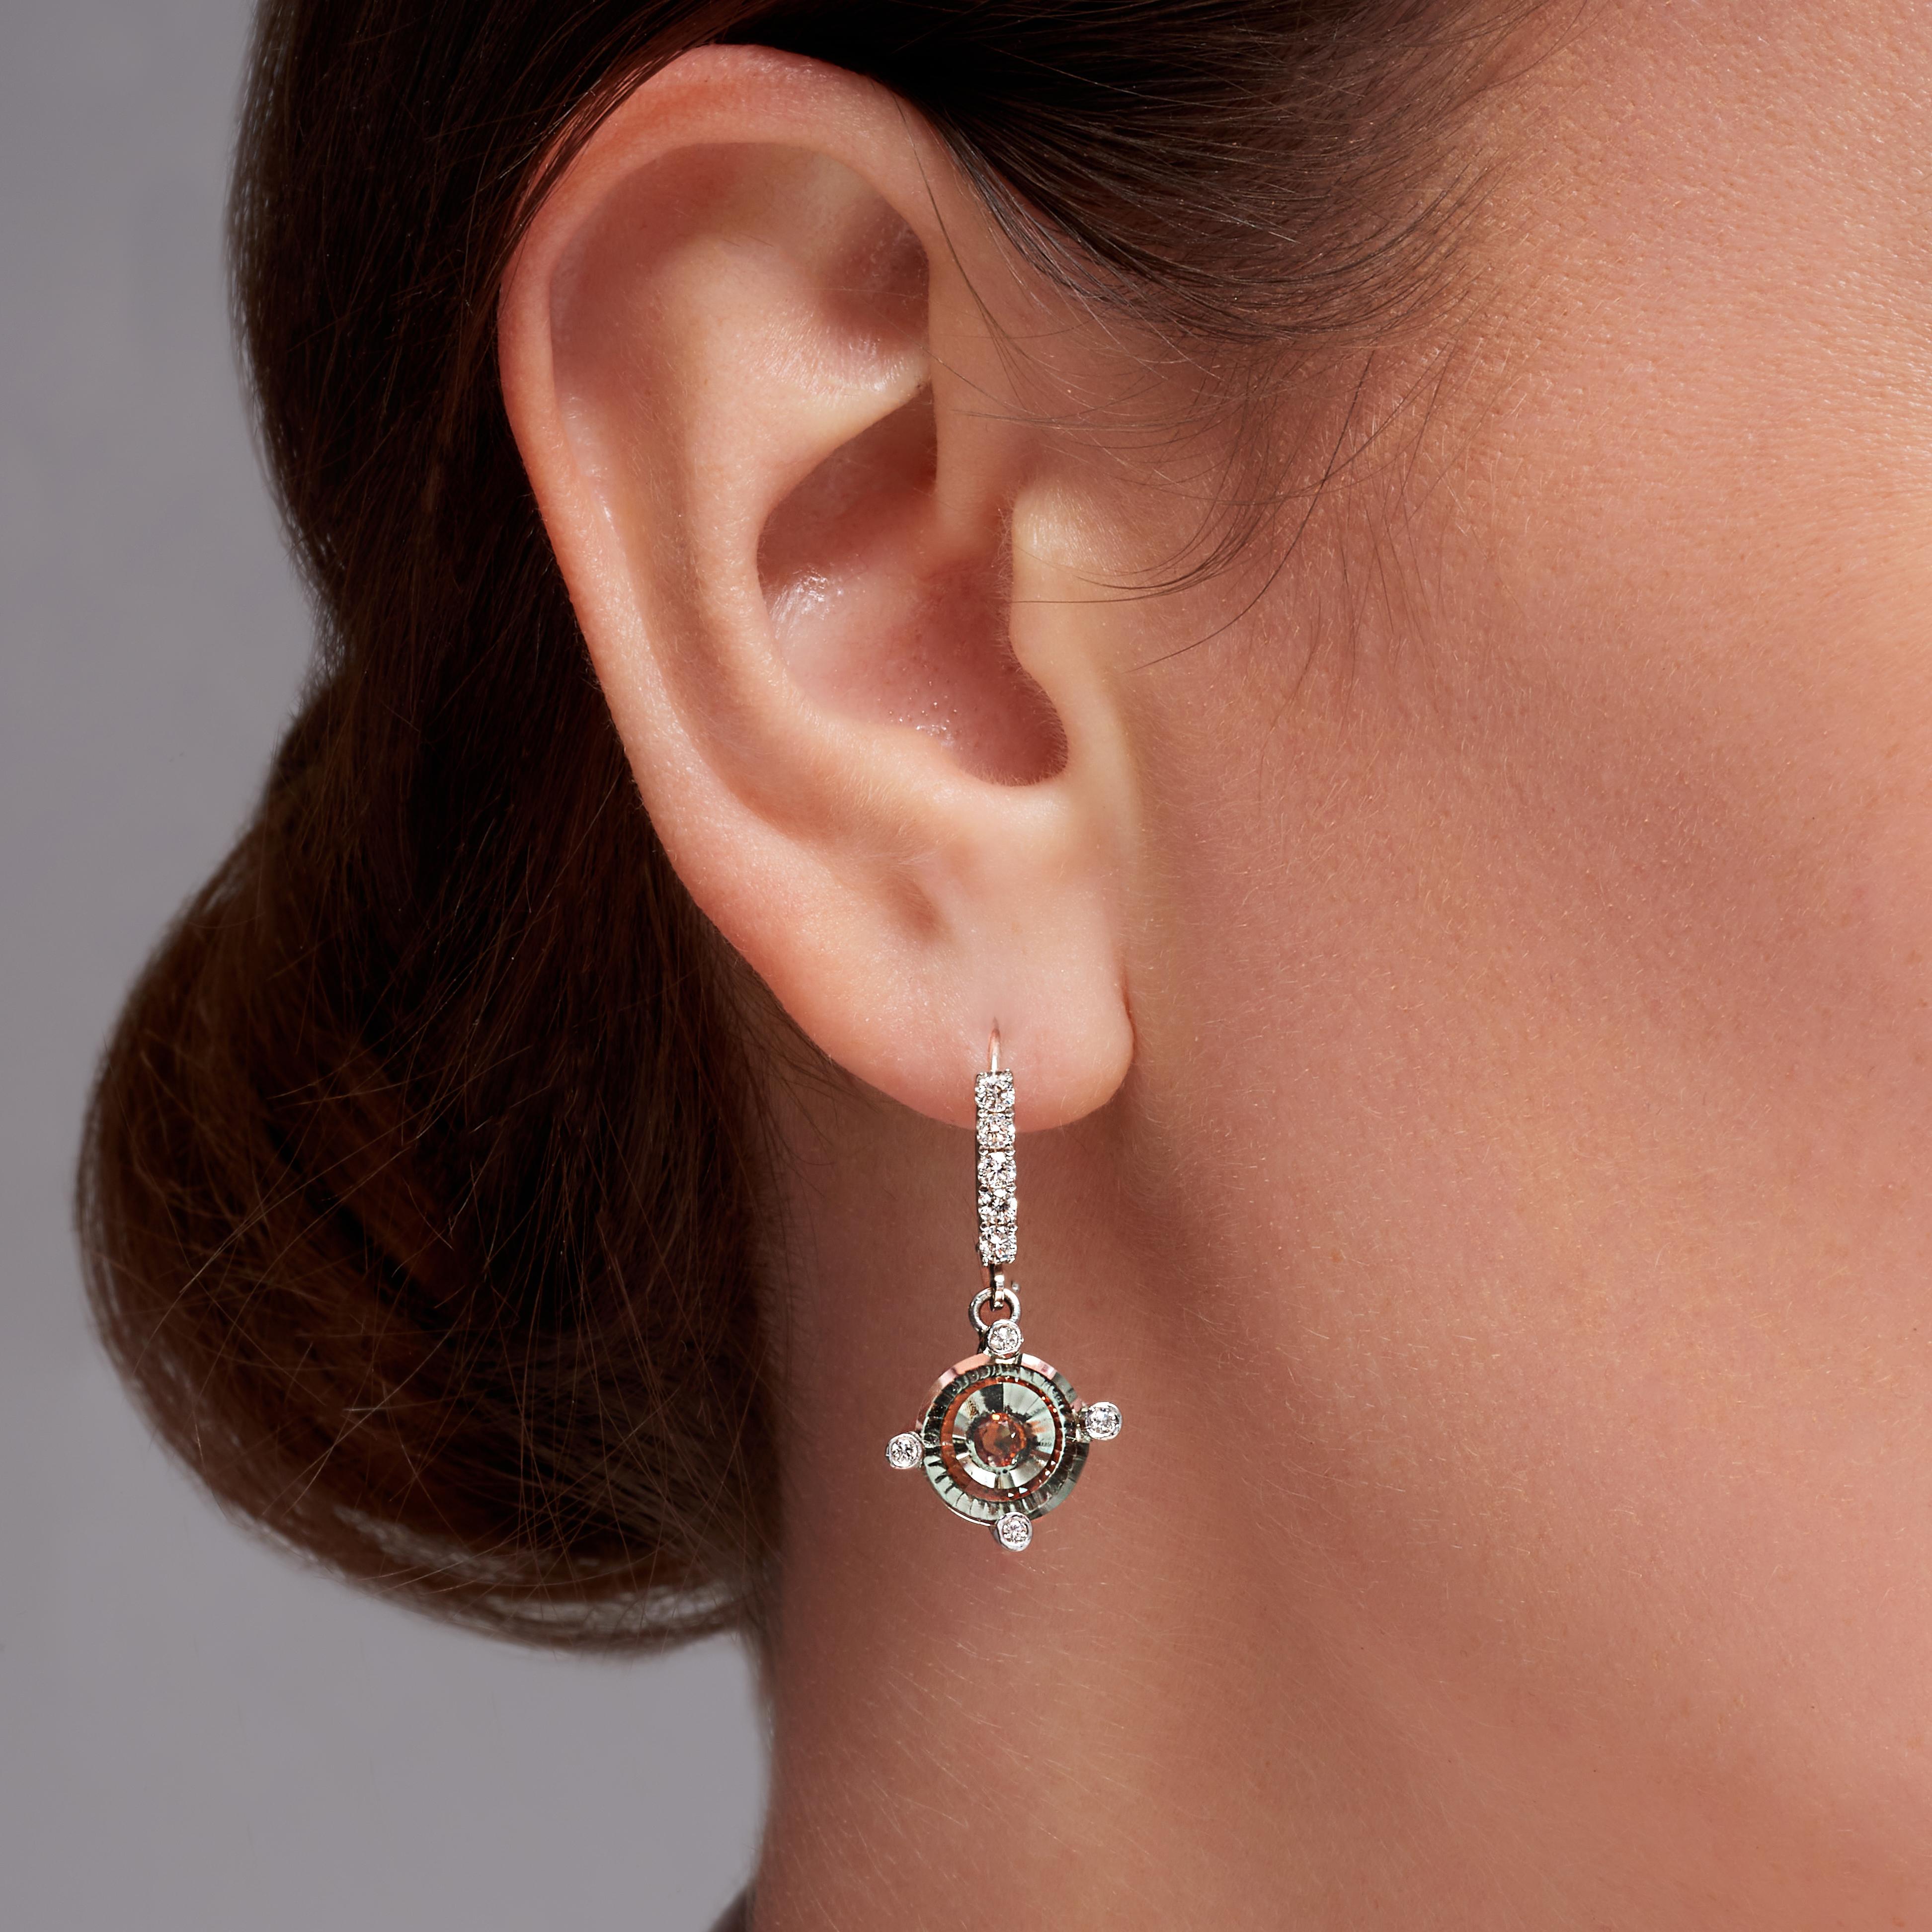 5 Carat Prasiolite Spessartite Garnet Diamond White Gold Drop Earrings. These 18-karat white gold drop earrings feature an 8-millimeter by 5-millimeter 5-carat total weight holographic cut prasiolite, cut by Darryl Alexander. This is an